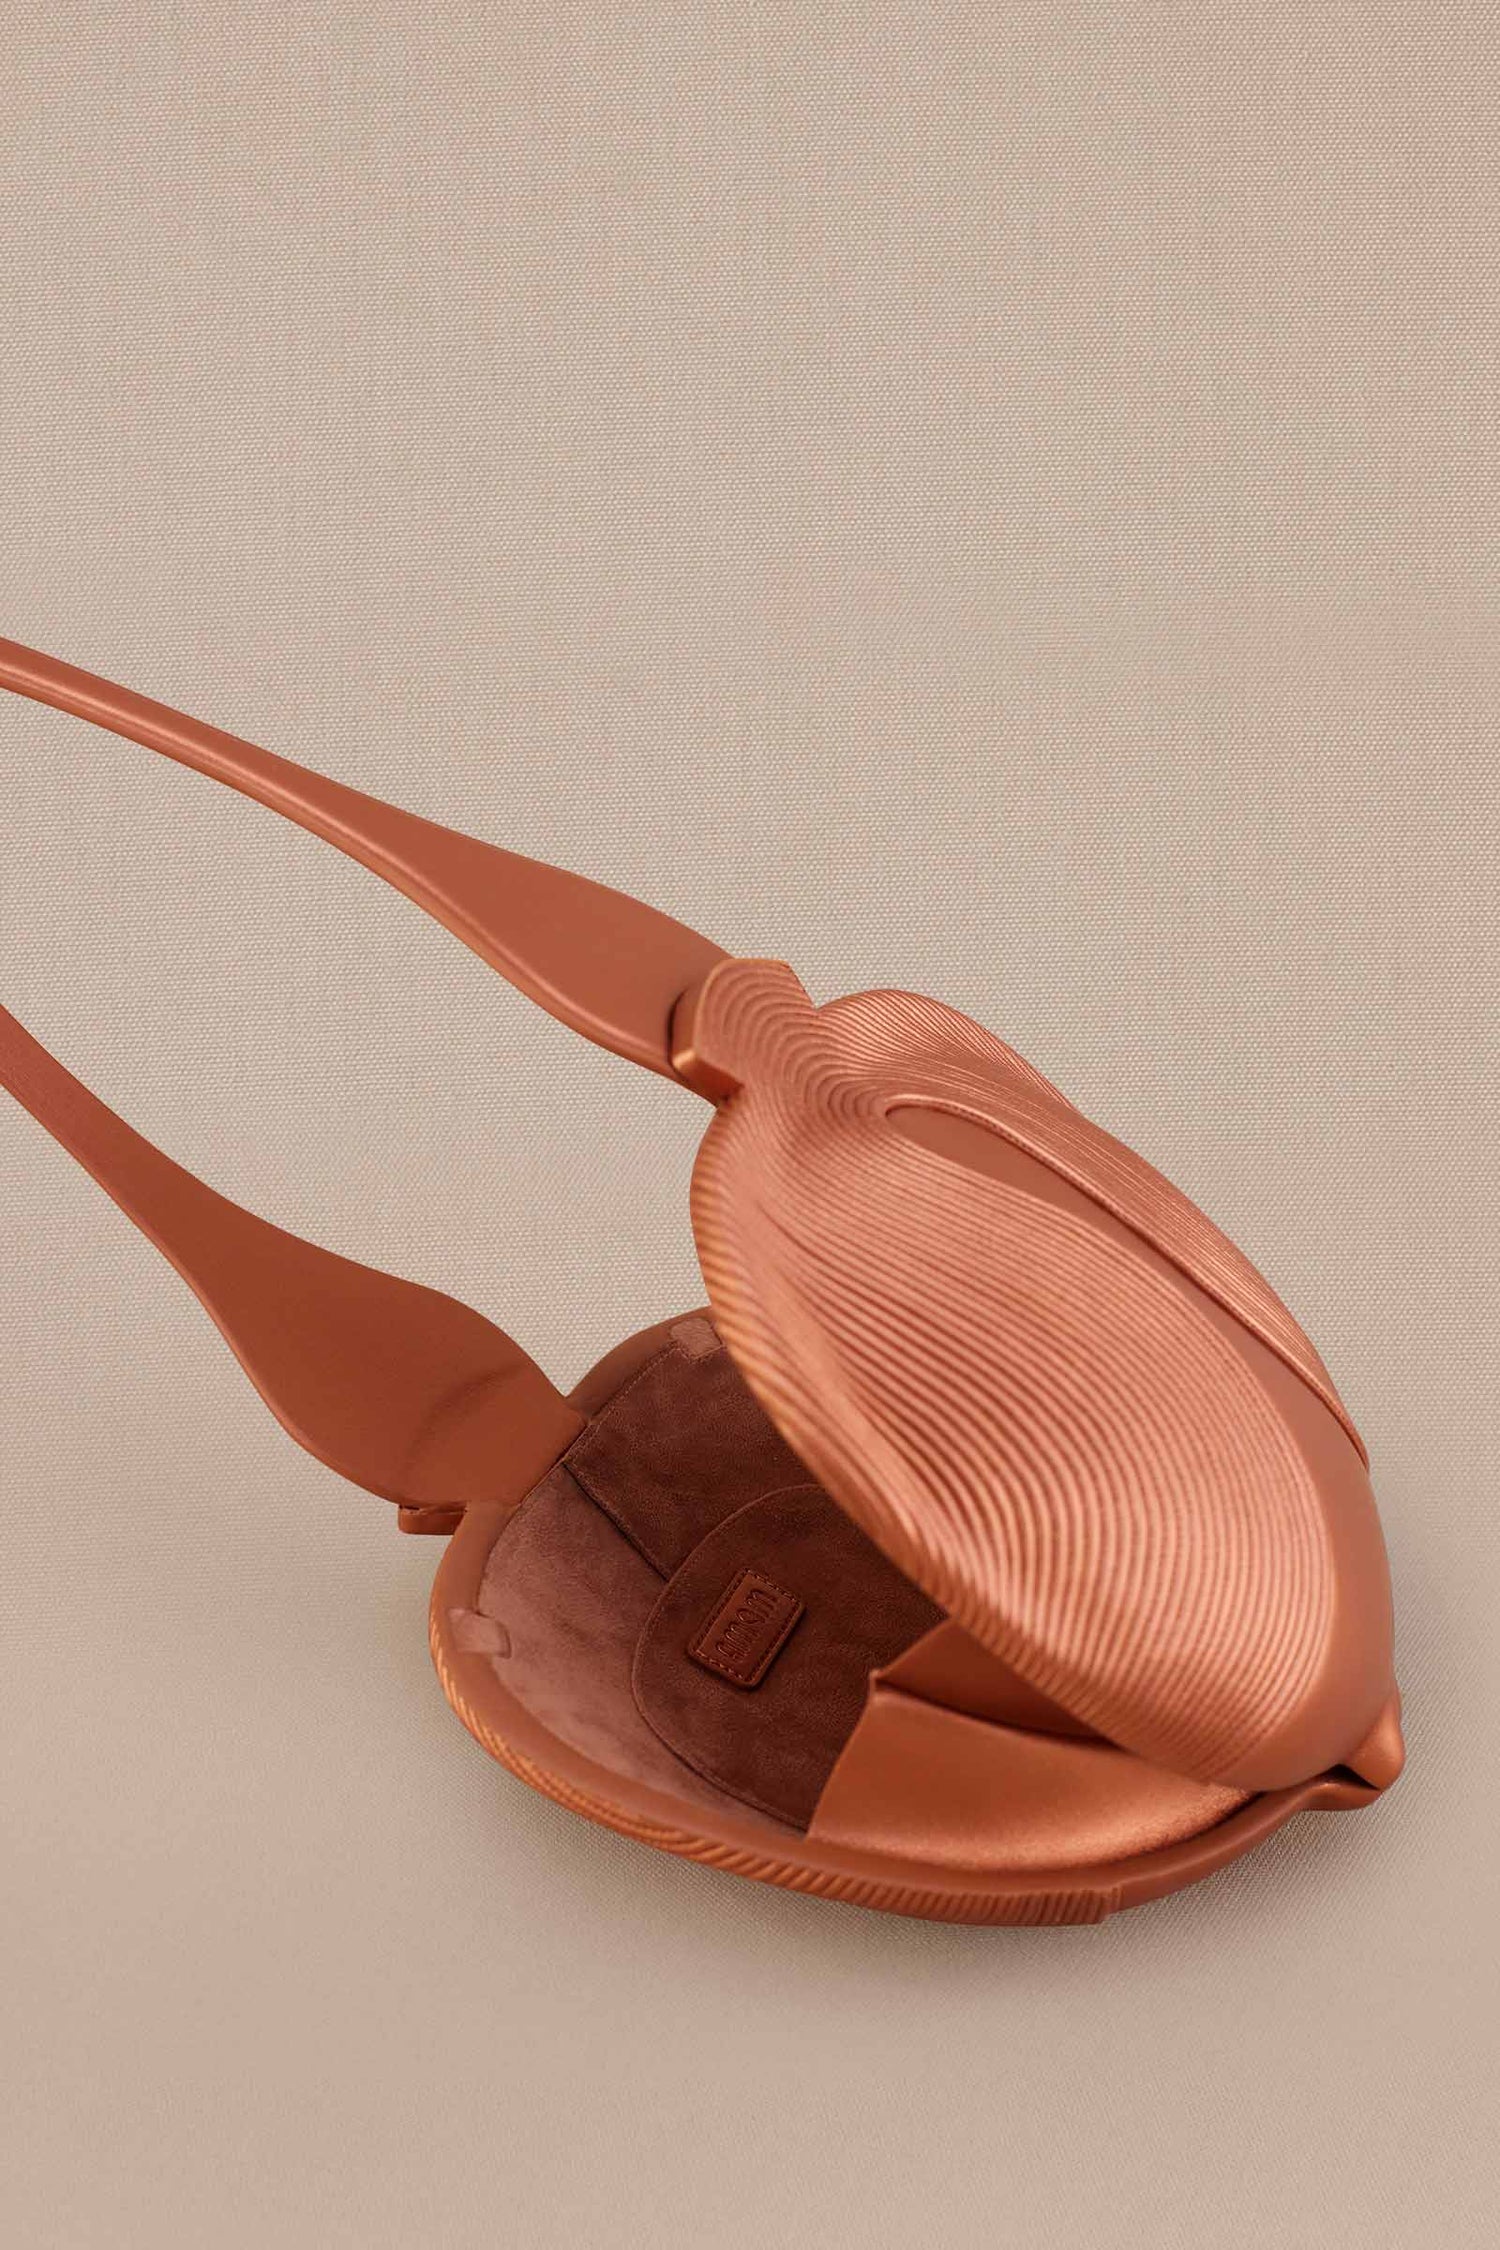 Kudrat Top Handle Bag - Metallic Copper